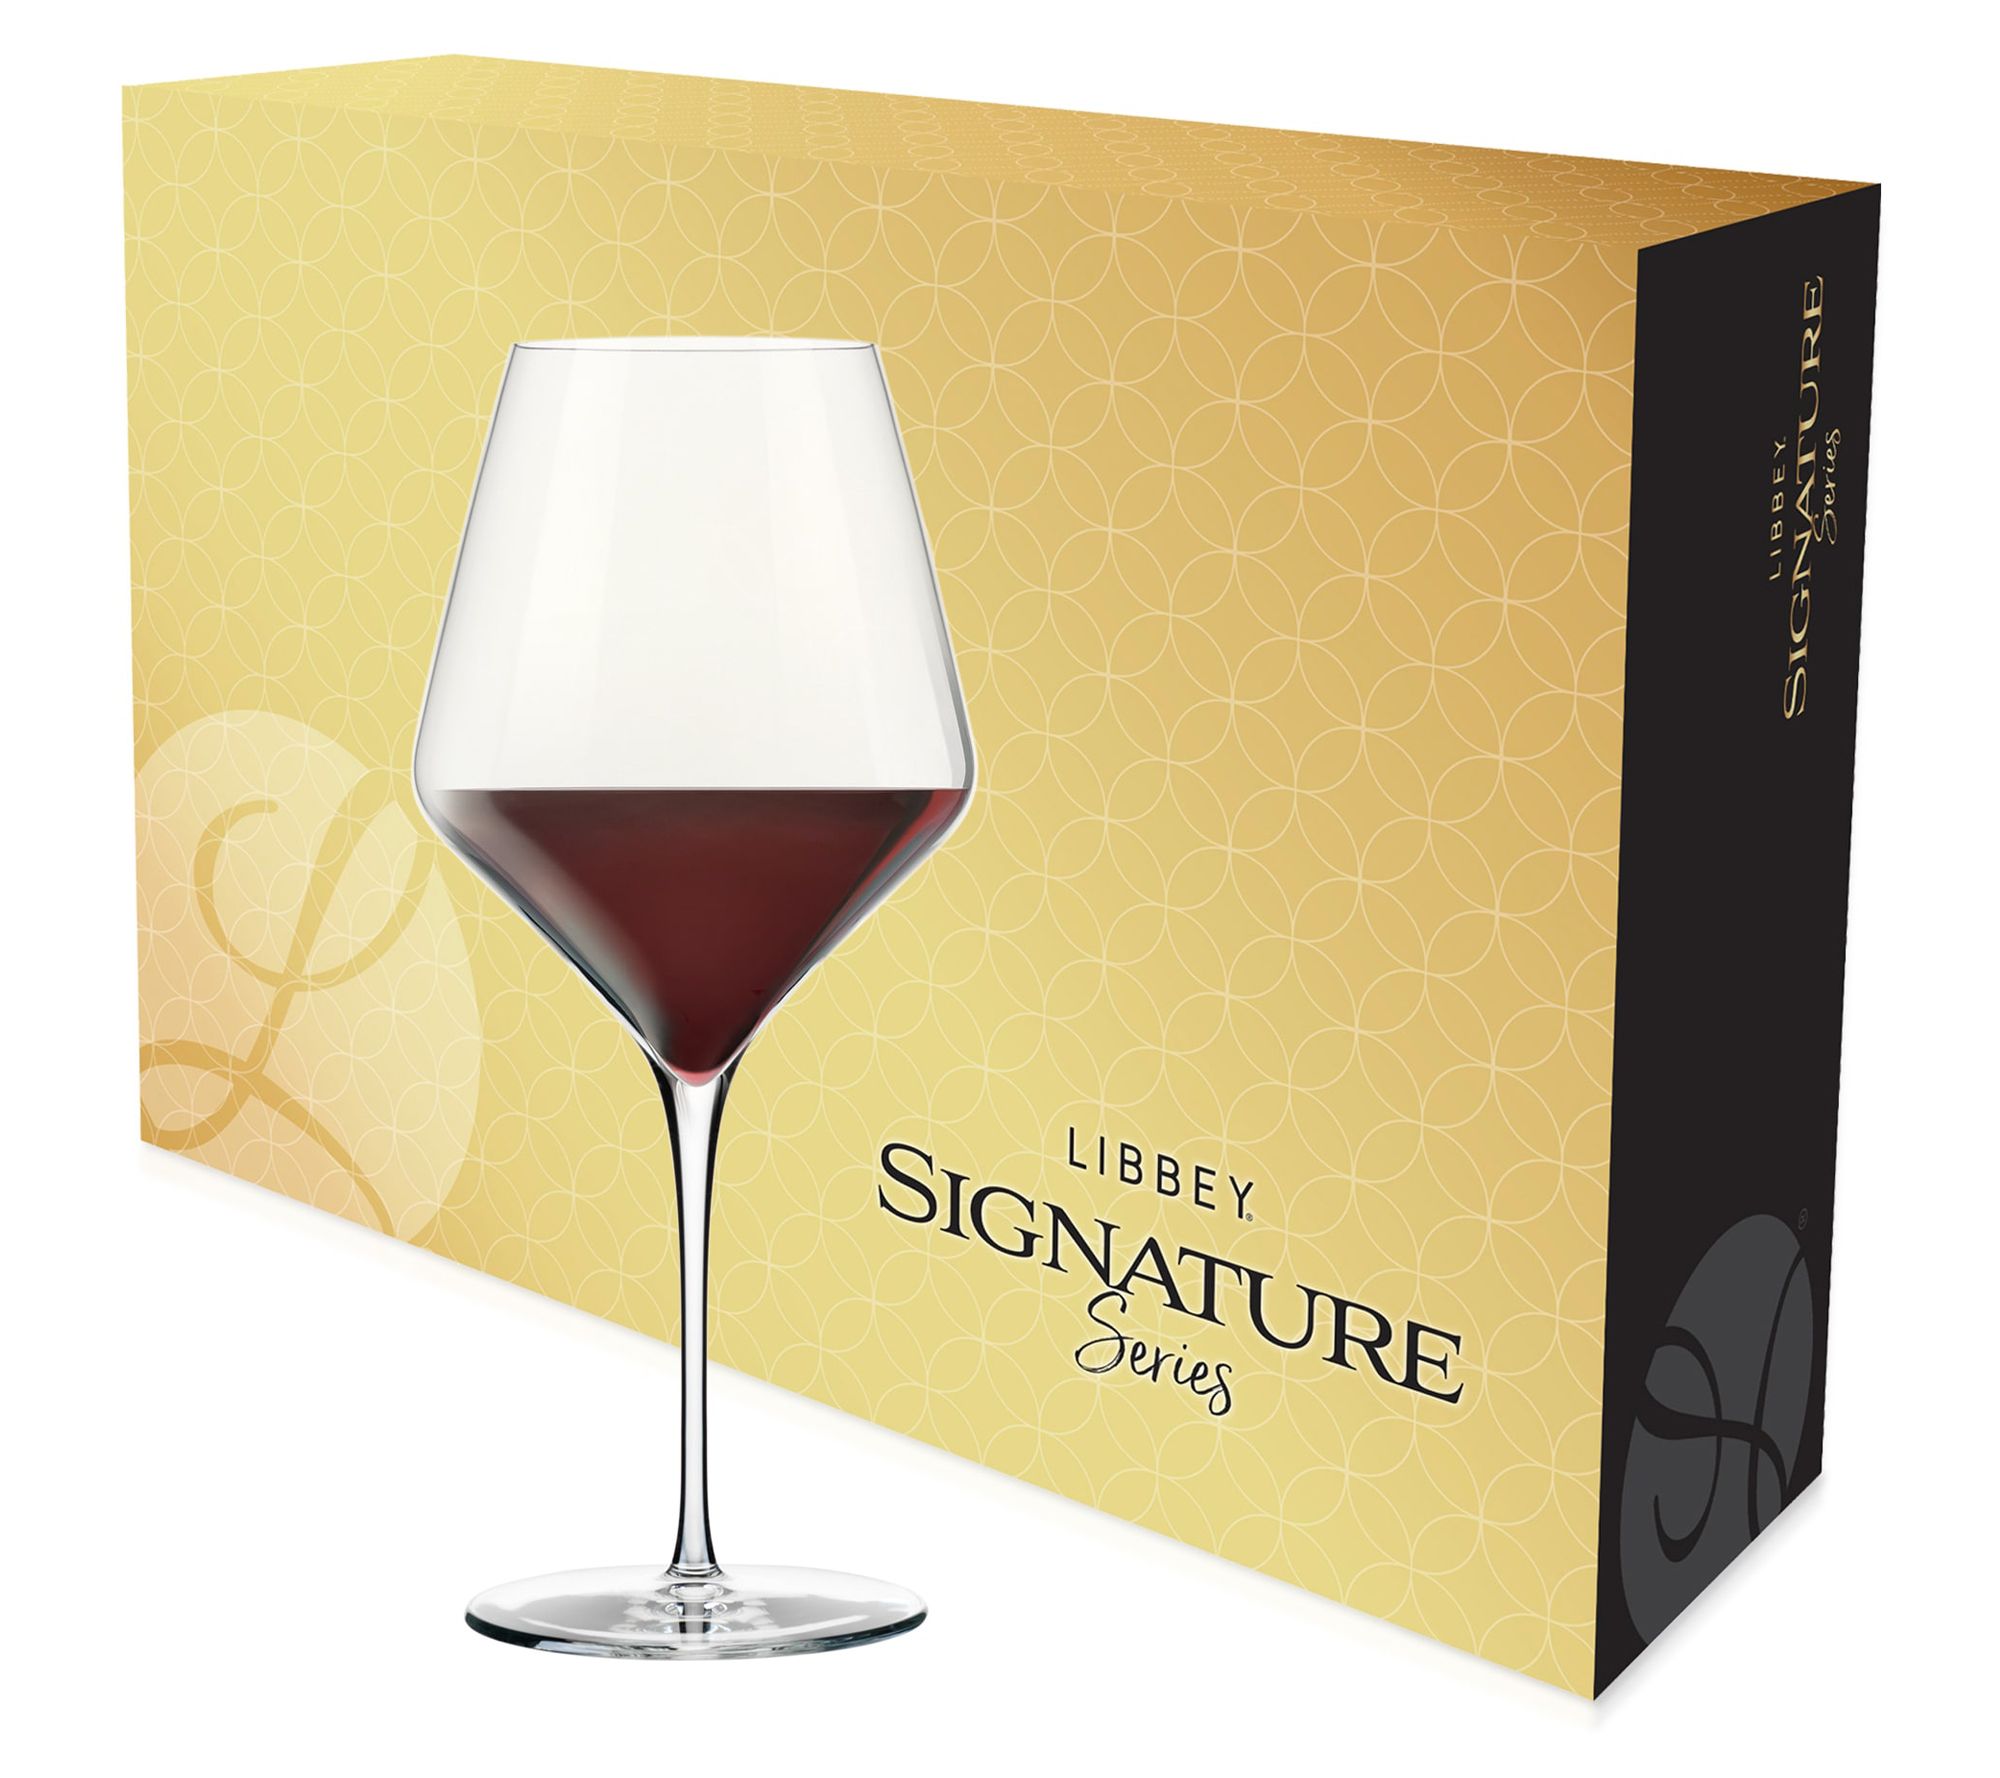 MARTHA STEWART 4-Piece 20 oz. Red Wine Glass Set 985118488M - The